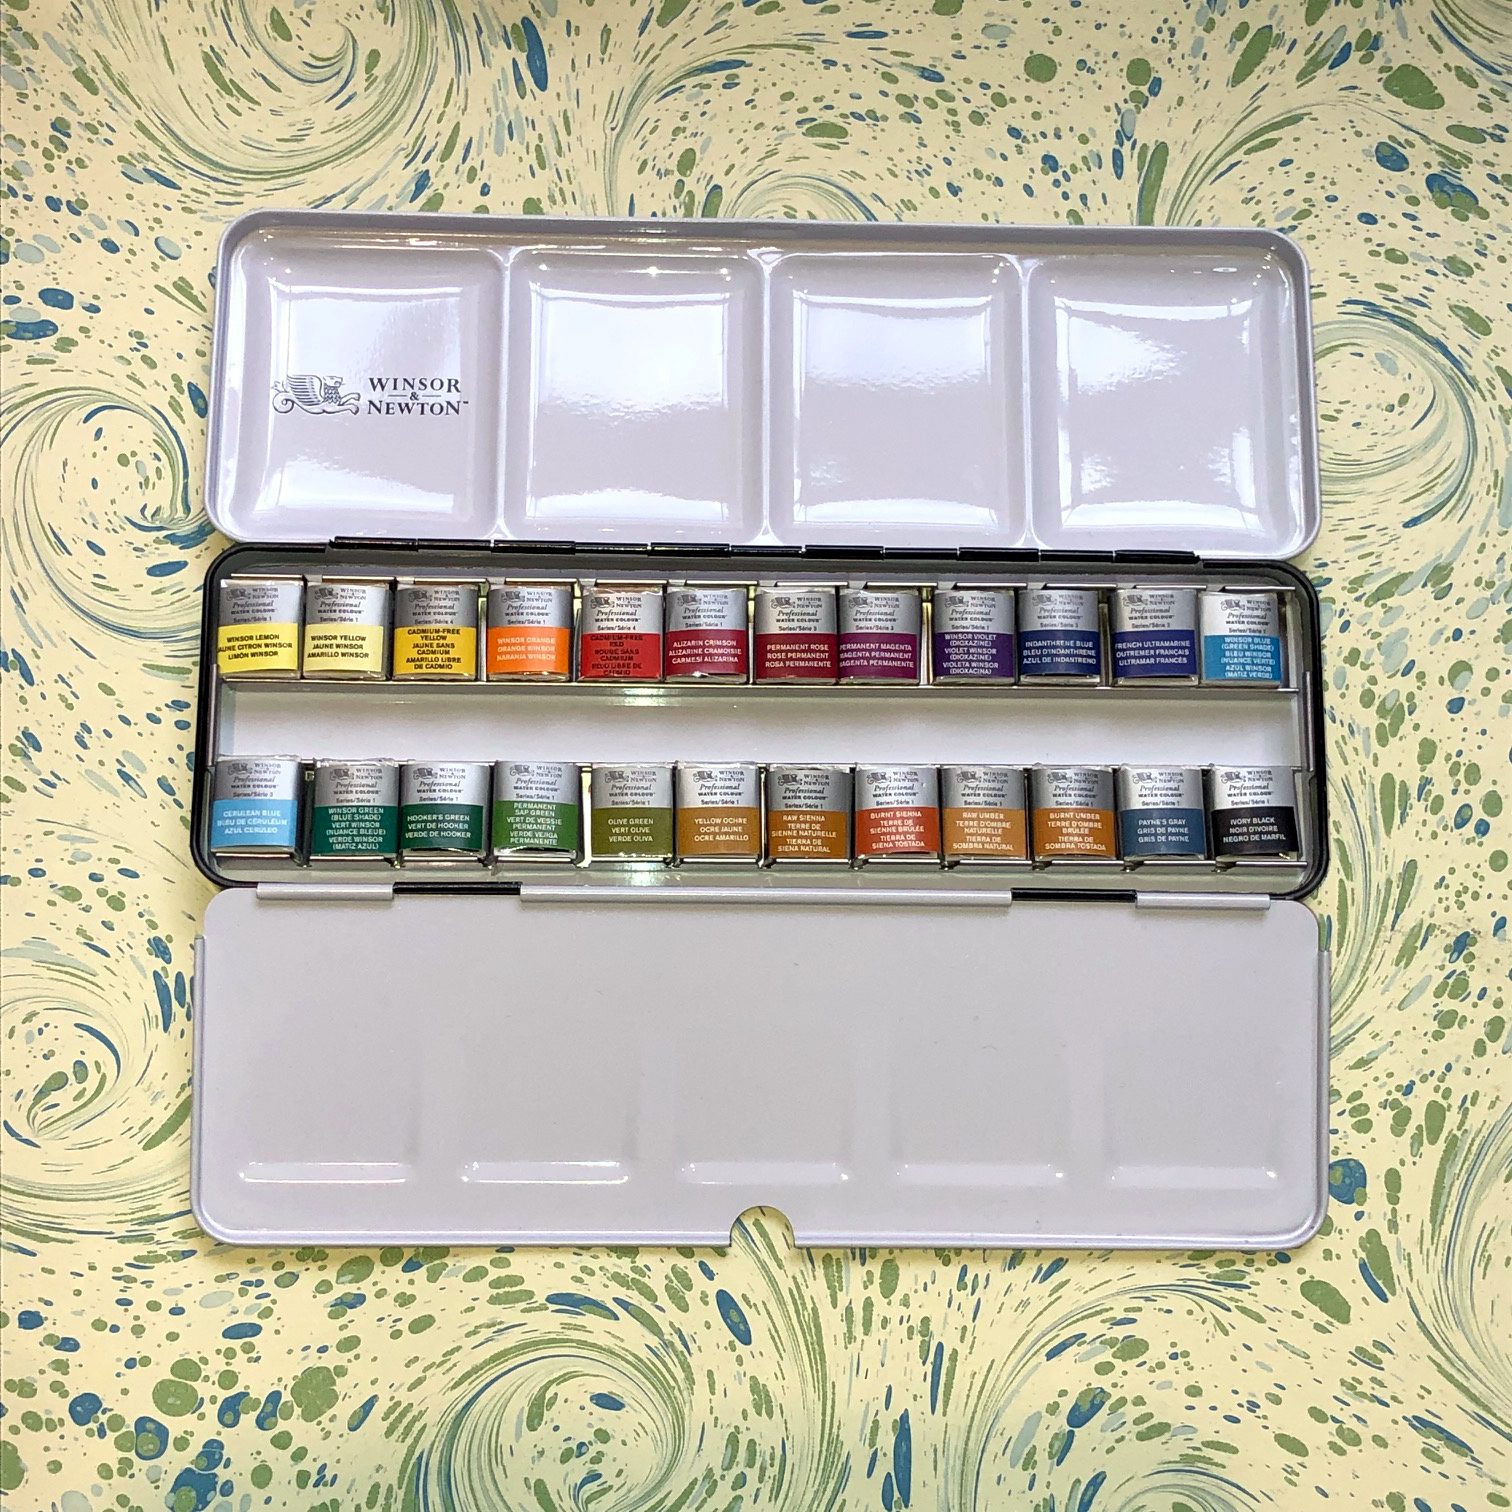 Best Watercolor Paints - Choosing the Best Watercolor Set for Your Art